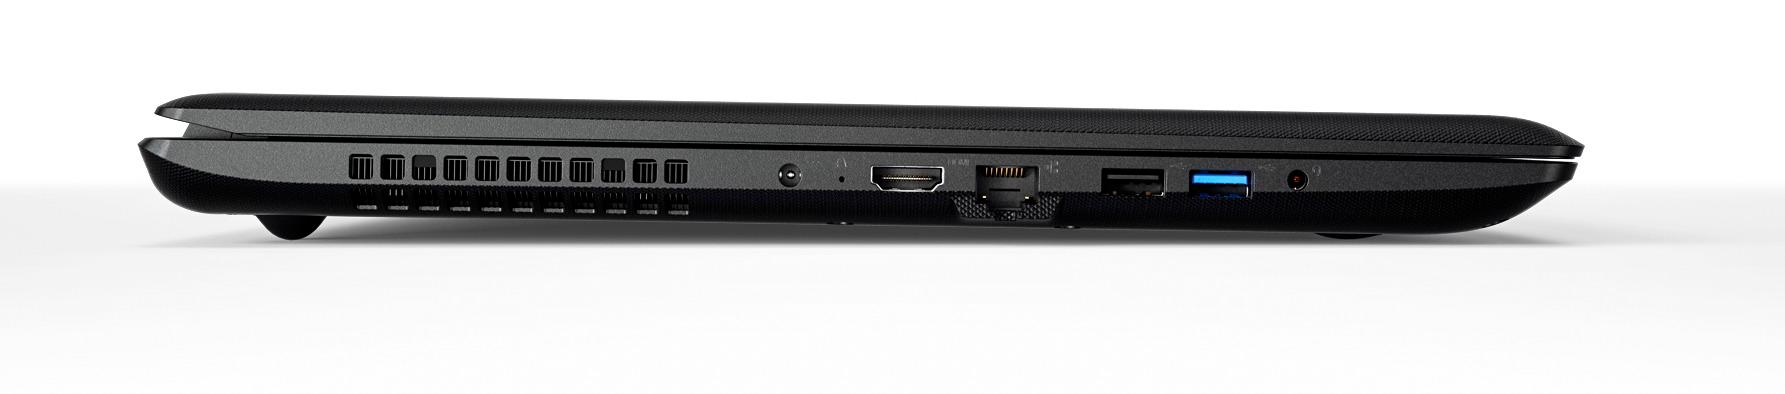 Best Buy: HP 15.6 Laptop AMD A6-Series 4GB Memory 500GB Hard